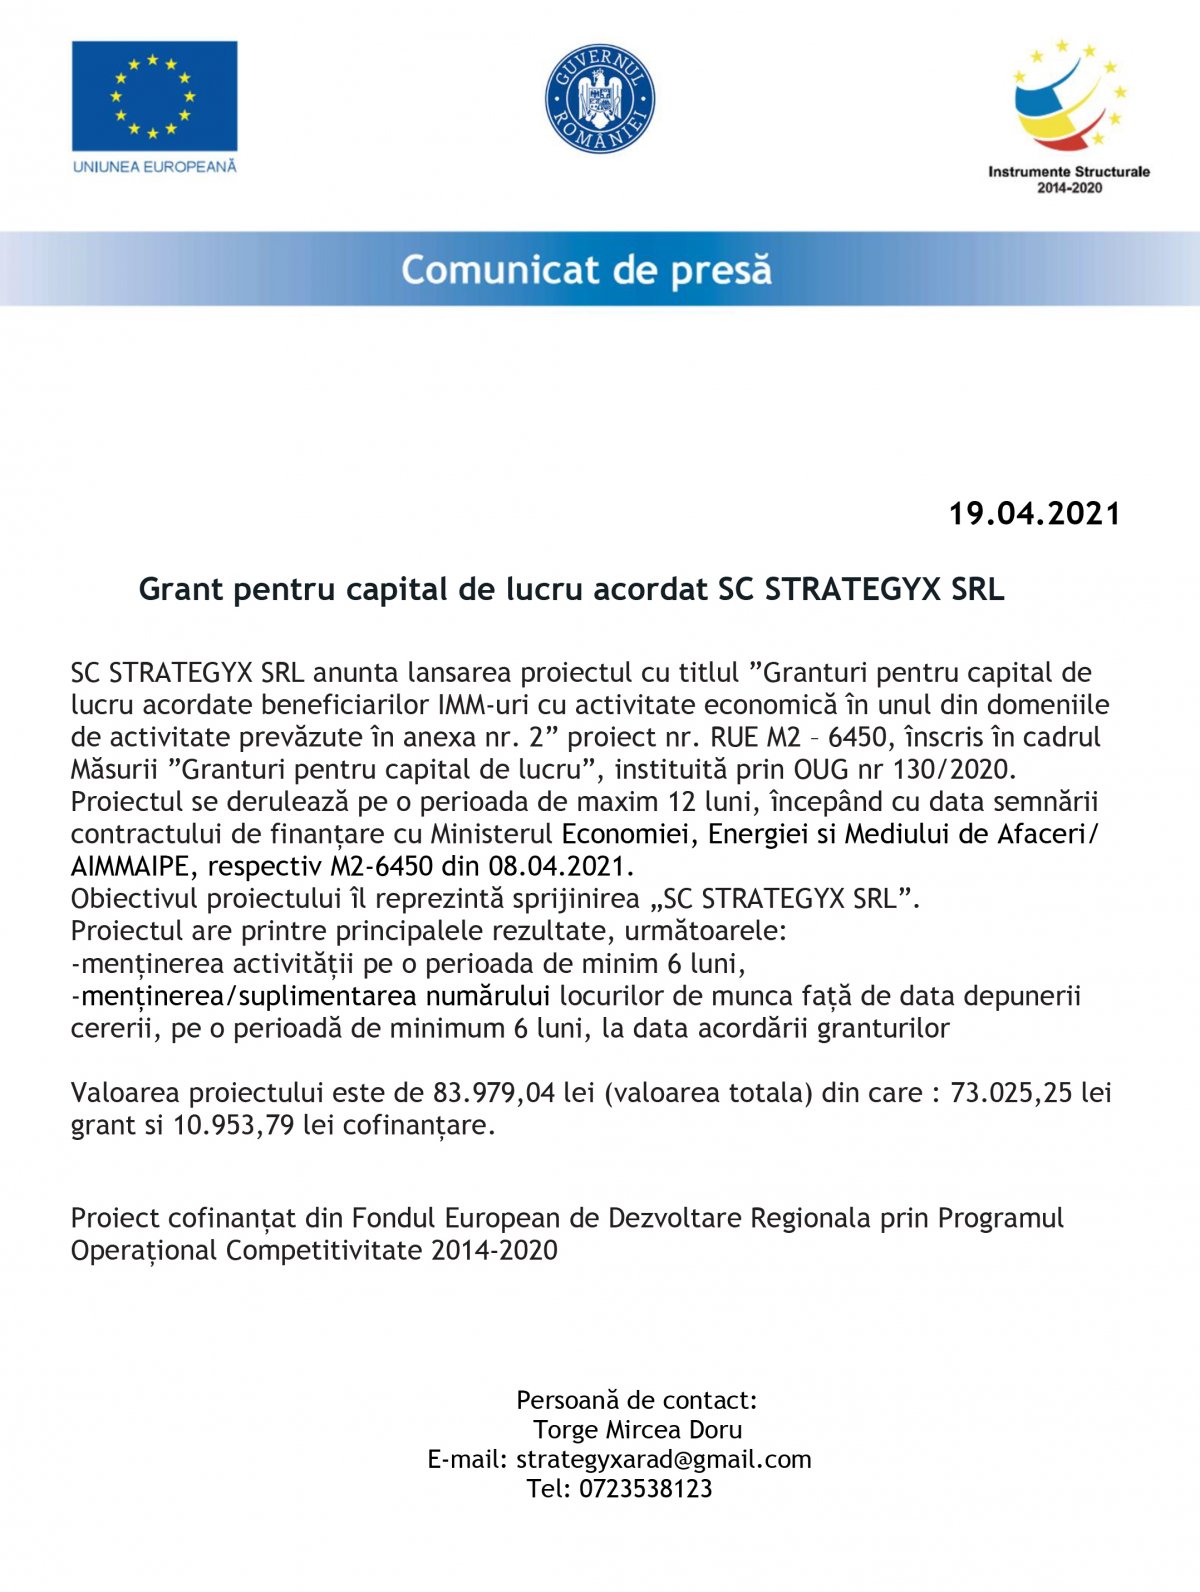 Grant pentru capital de lucru acordat SC STRATEGYX SRL